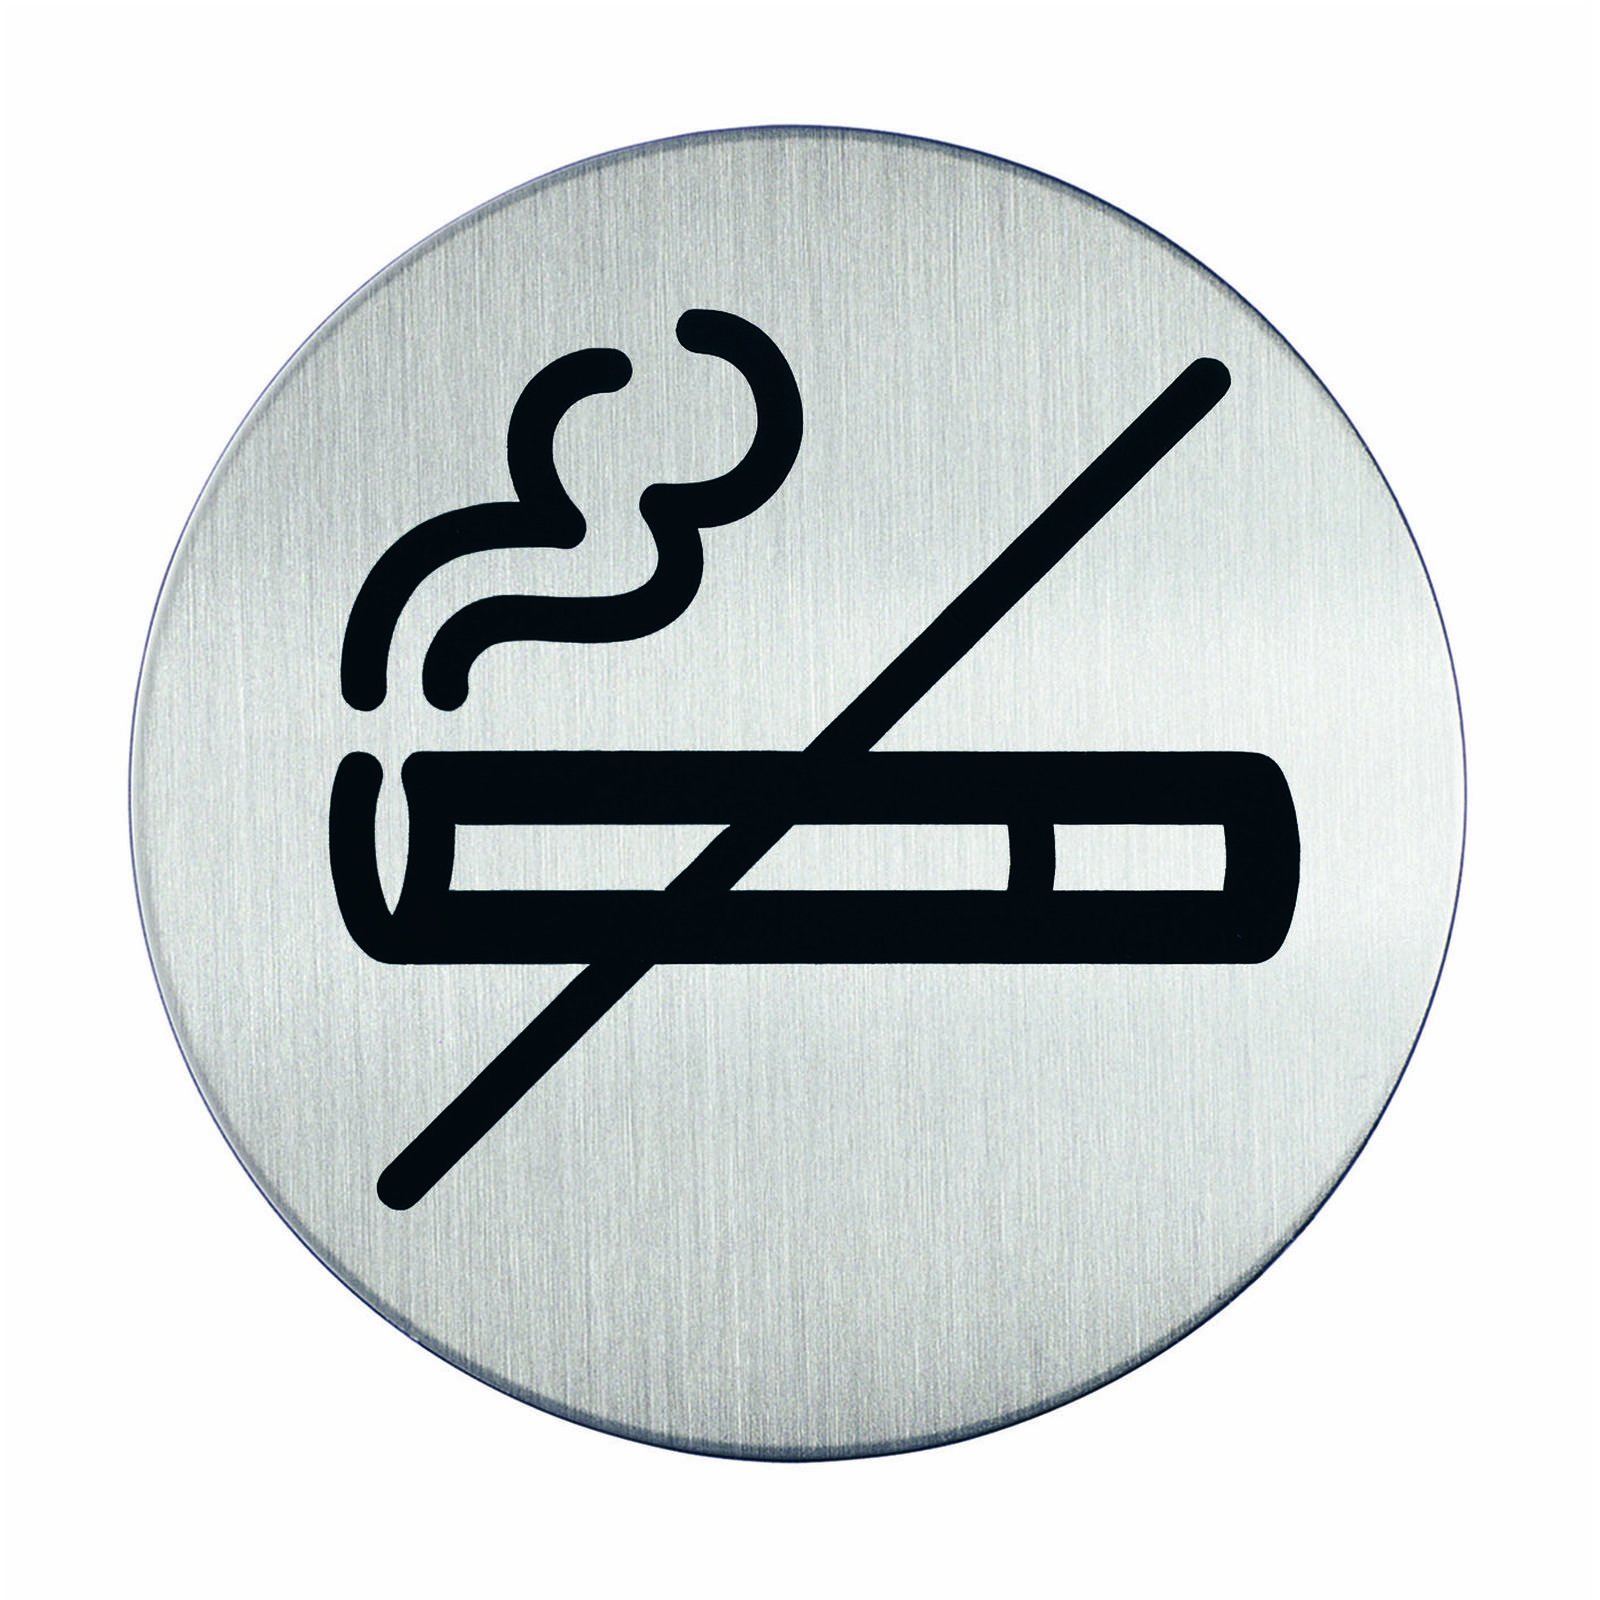 Durable rygning forbudt piktogram Rygning forbudt